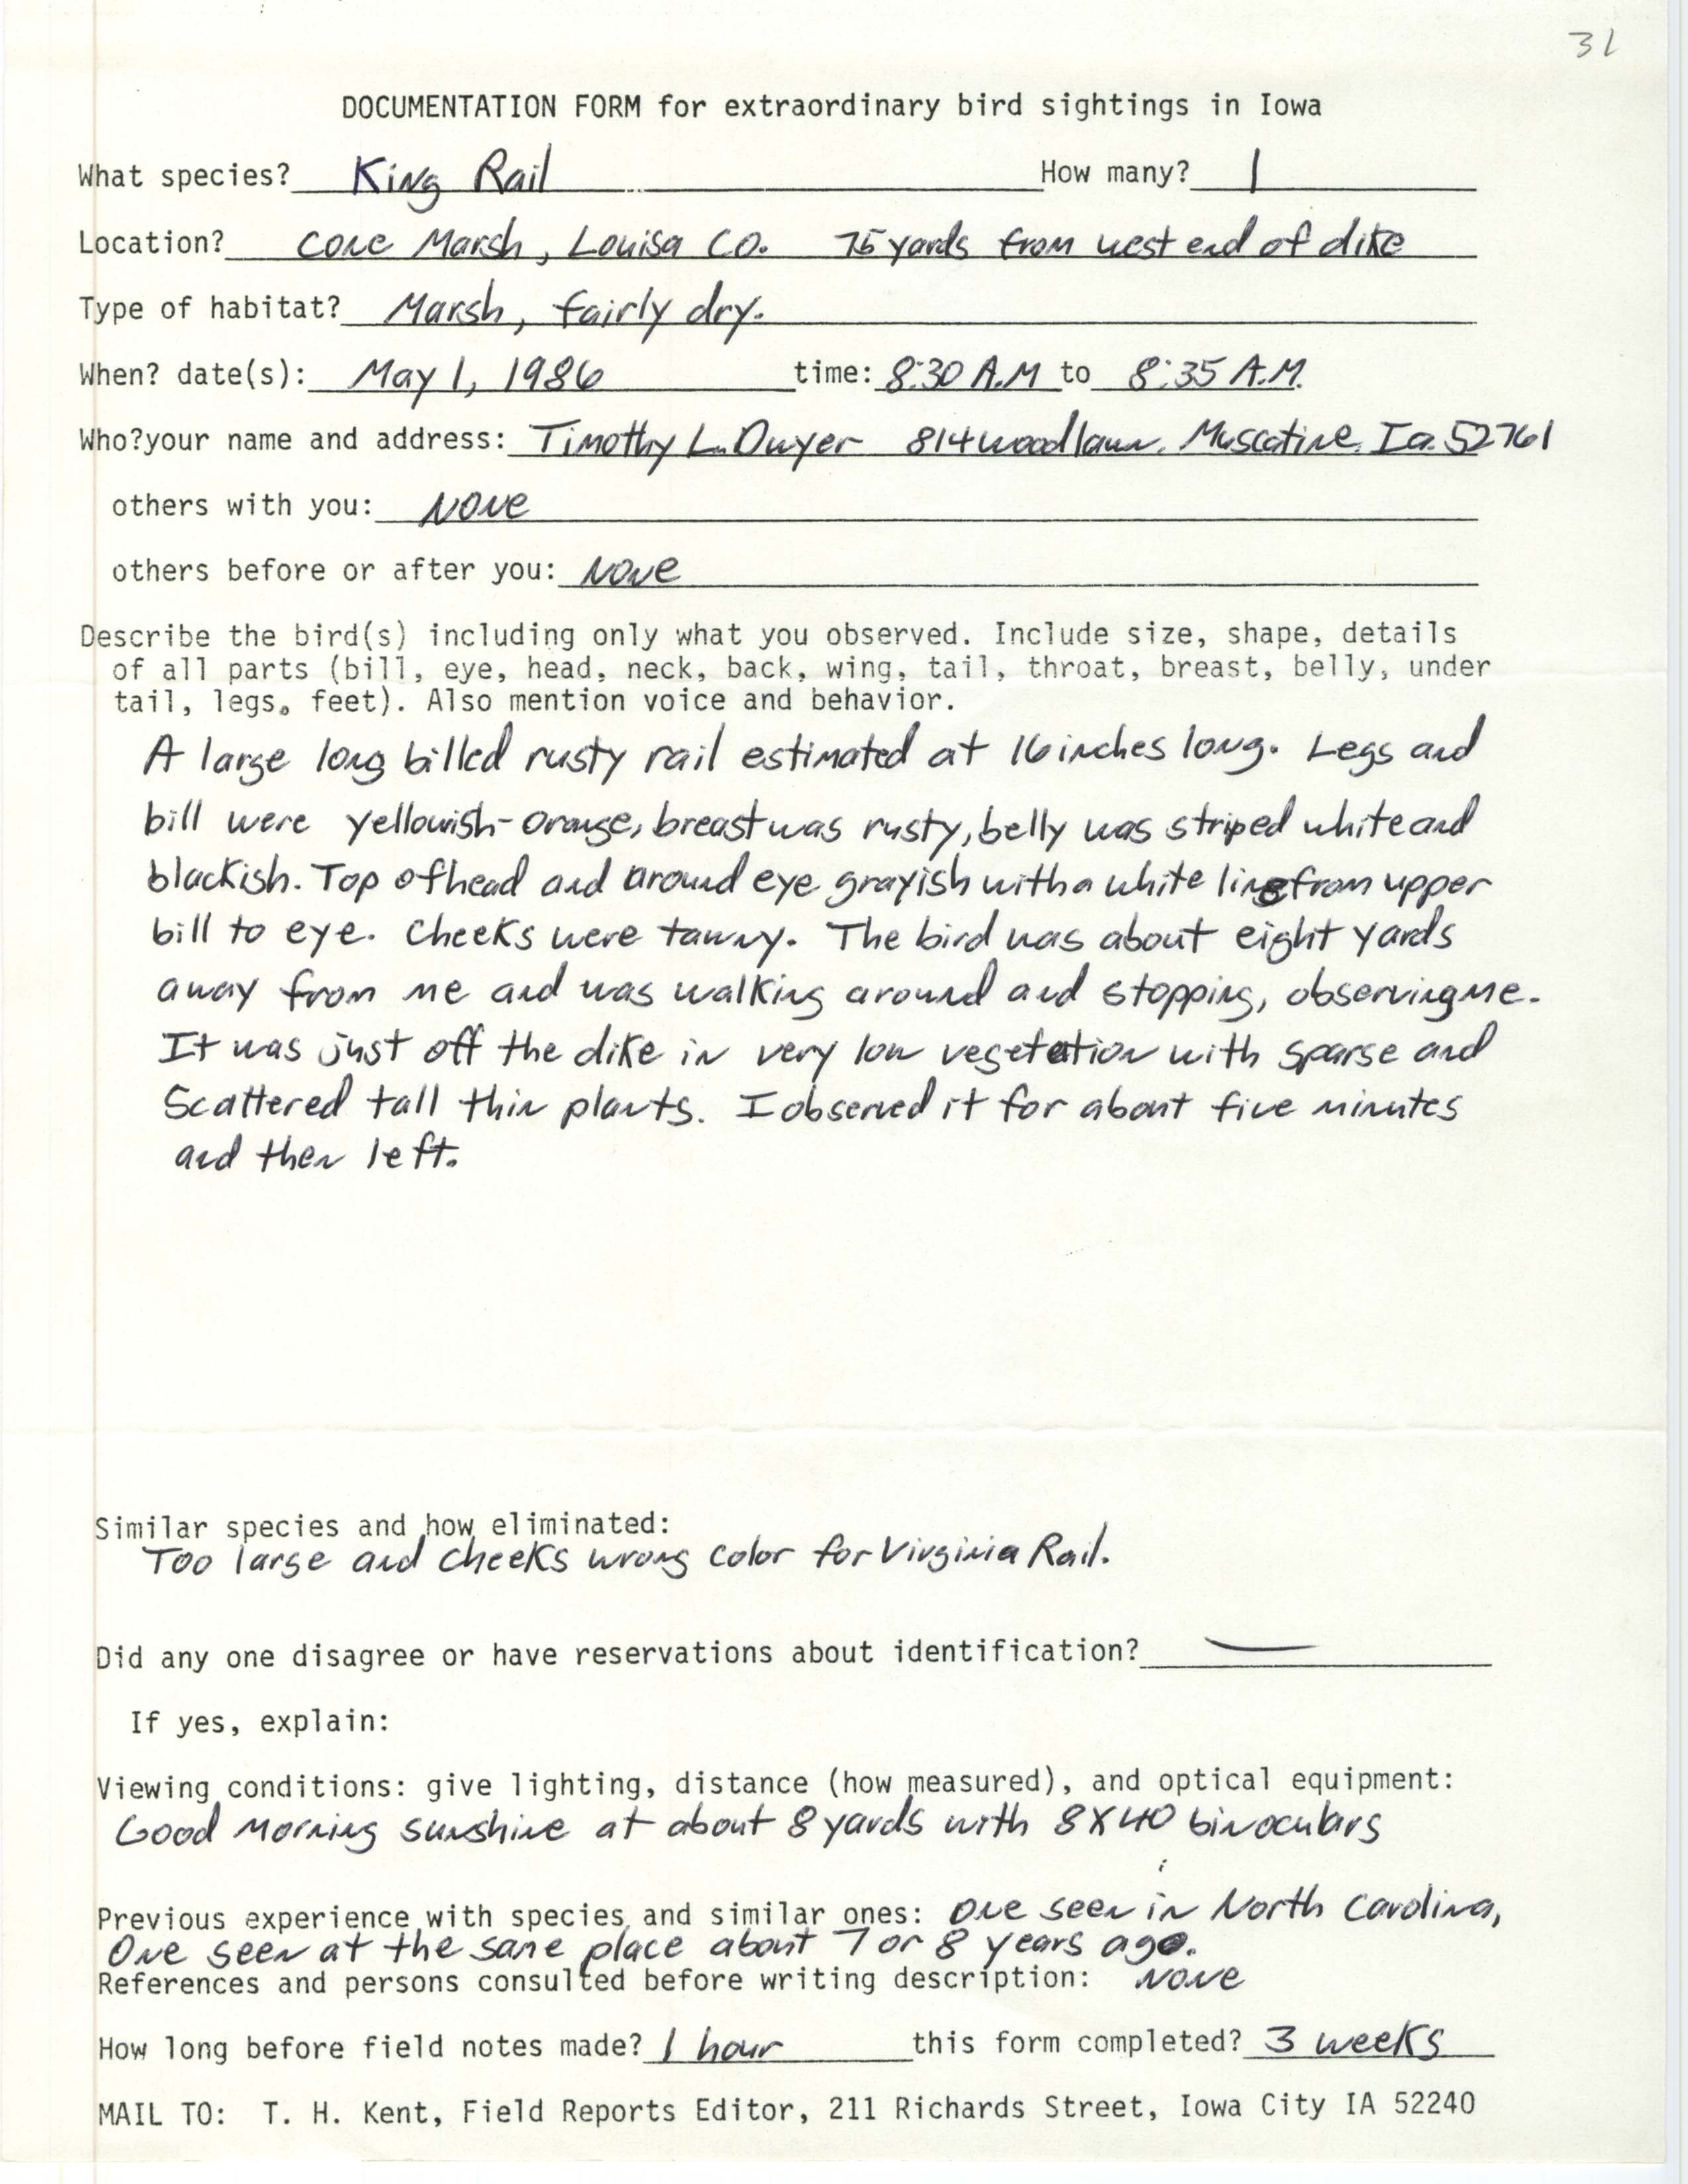 Rare bird documentation form for King Rail at Cone Marsh, 1986